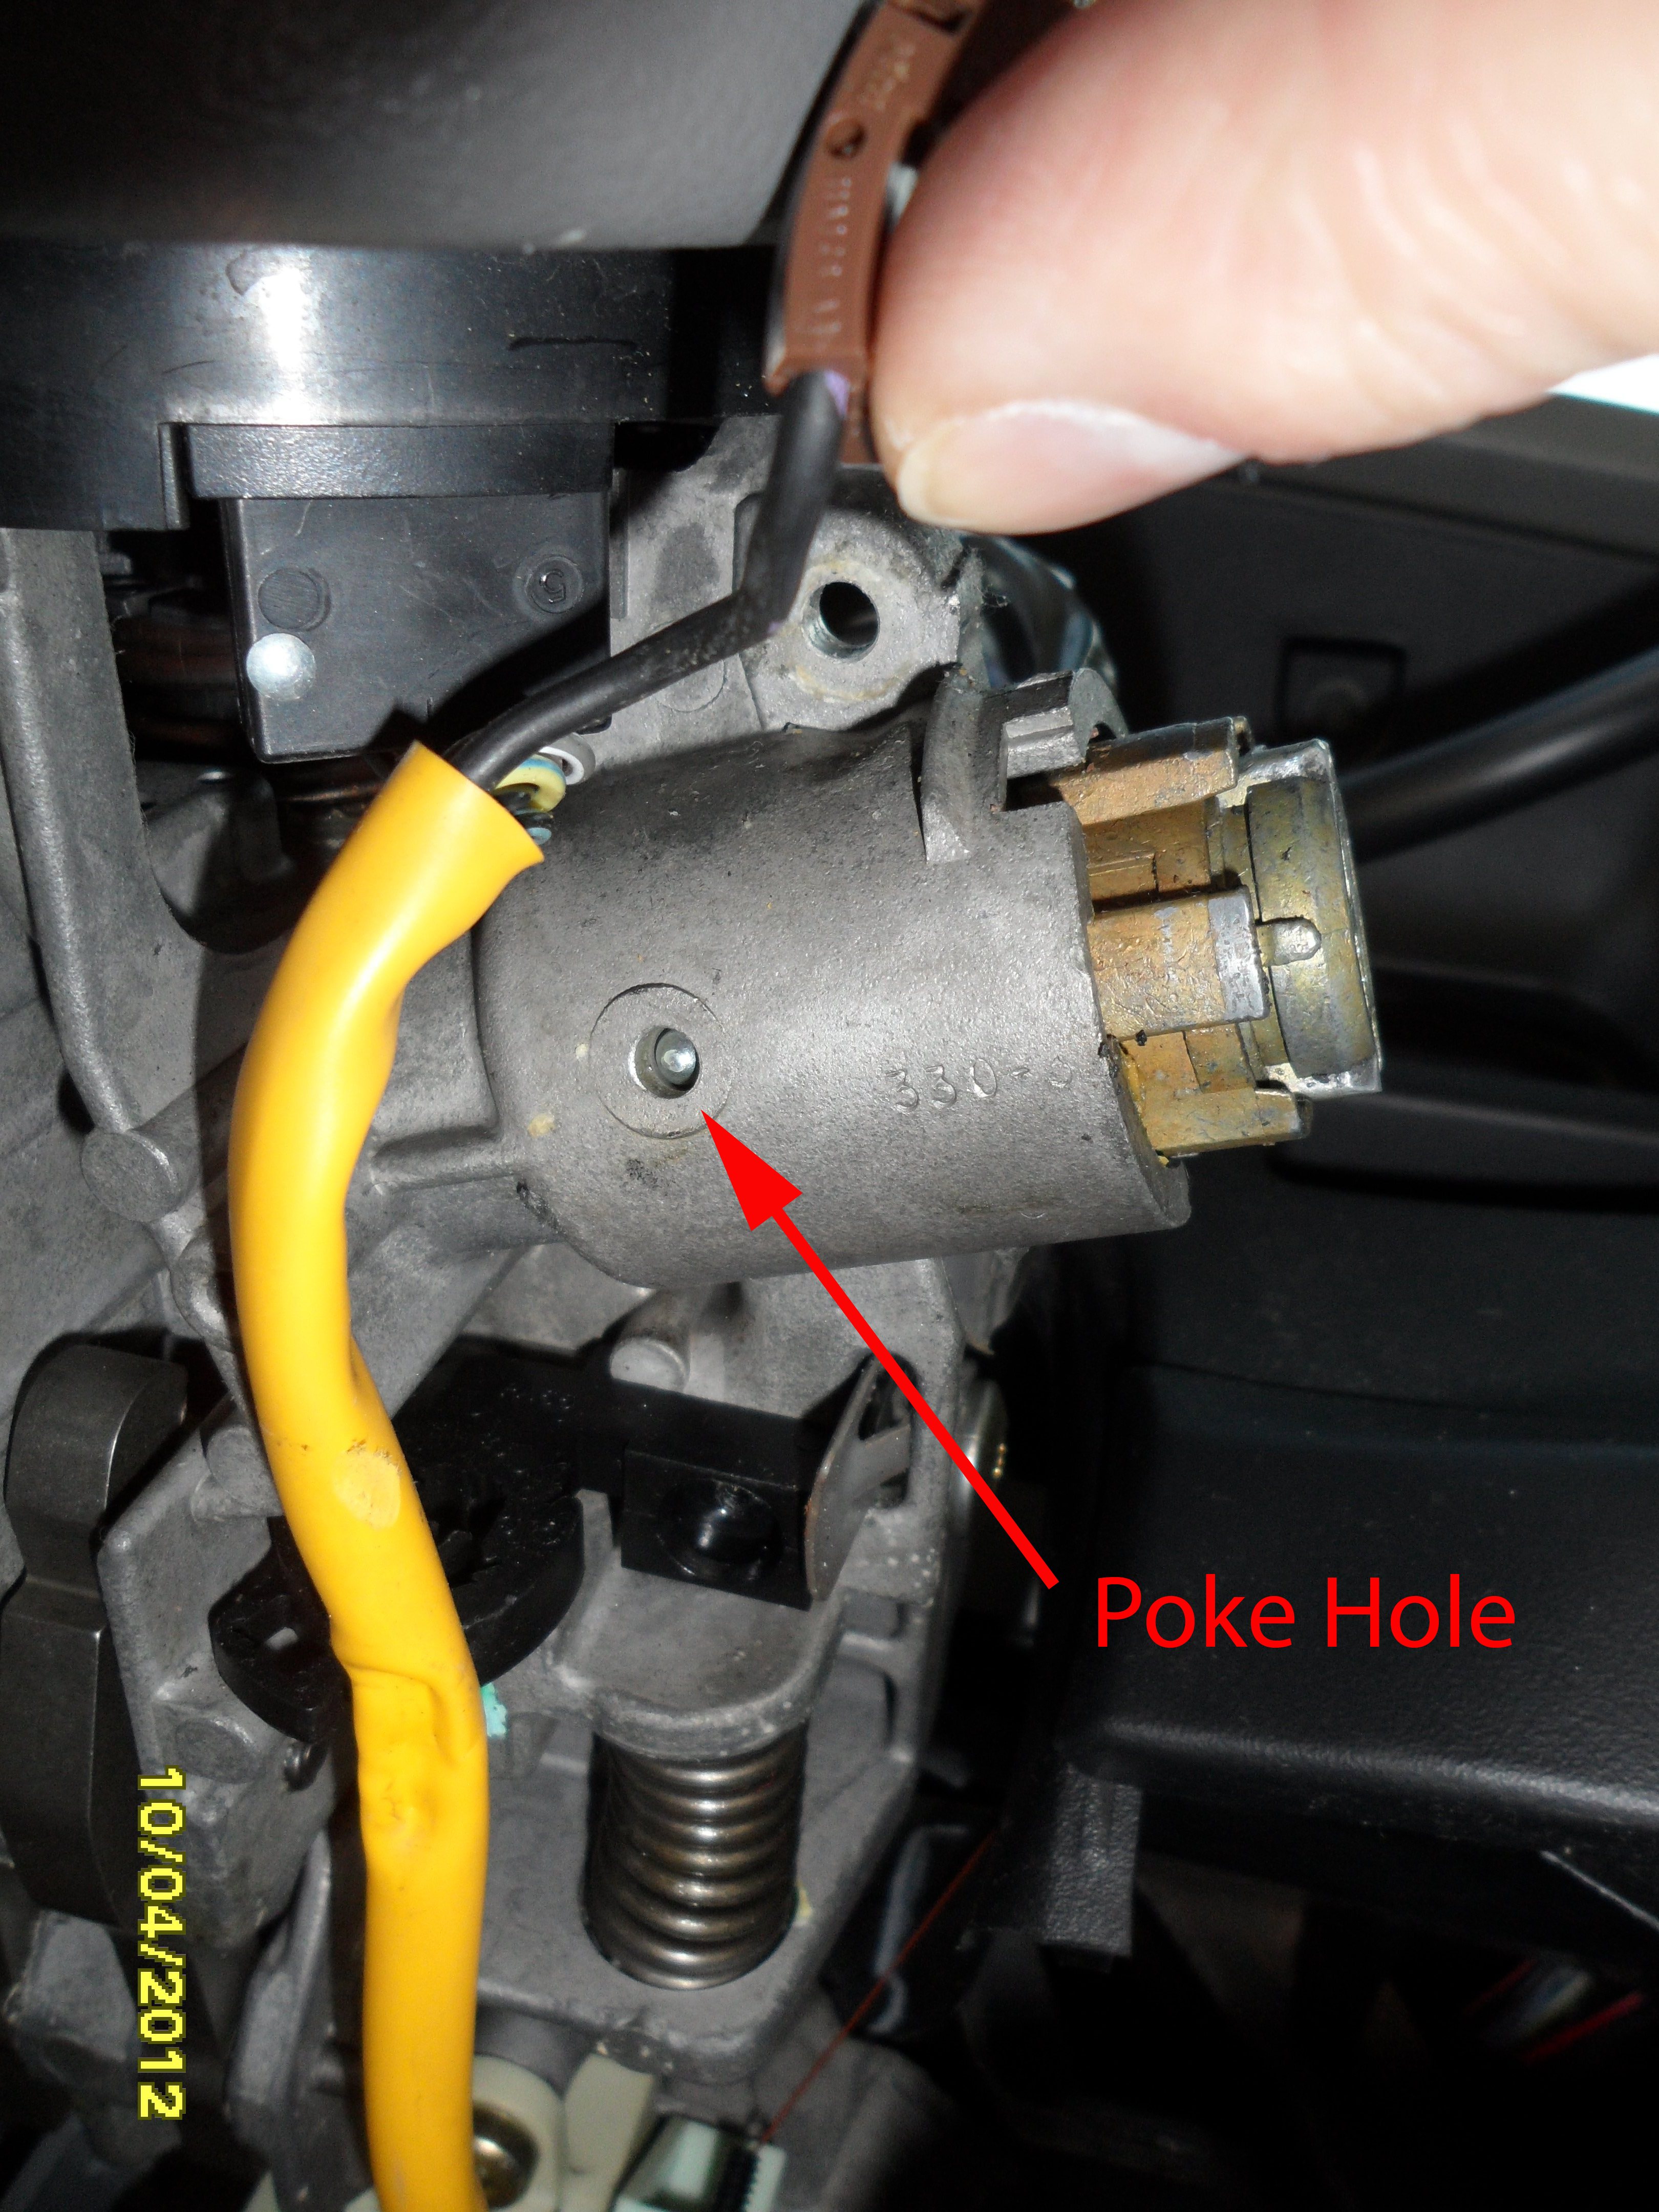 Ford aerostar ignition switch problems #4